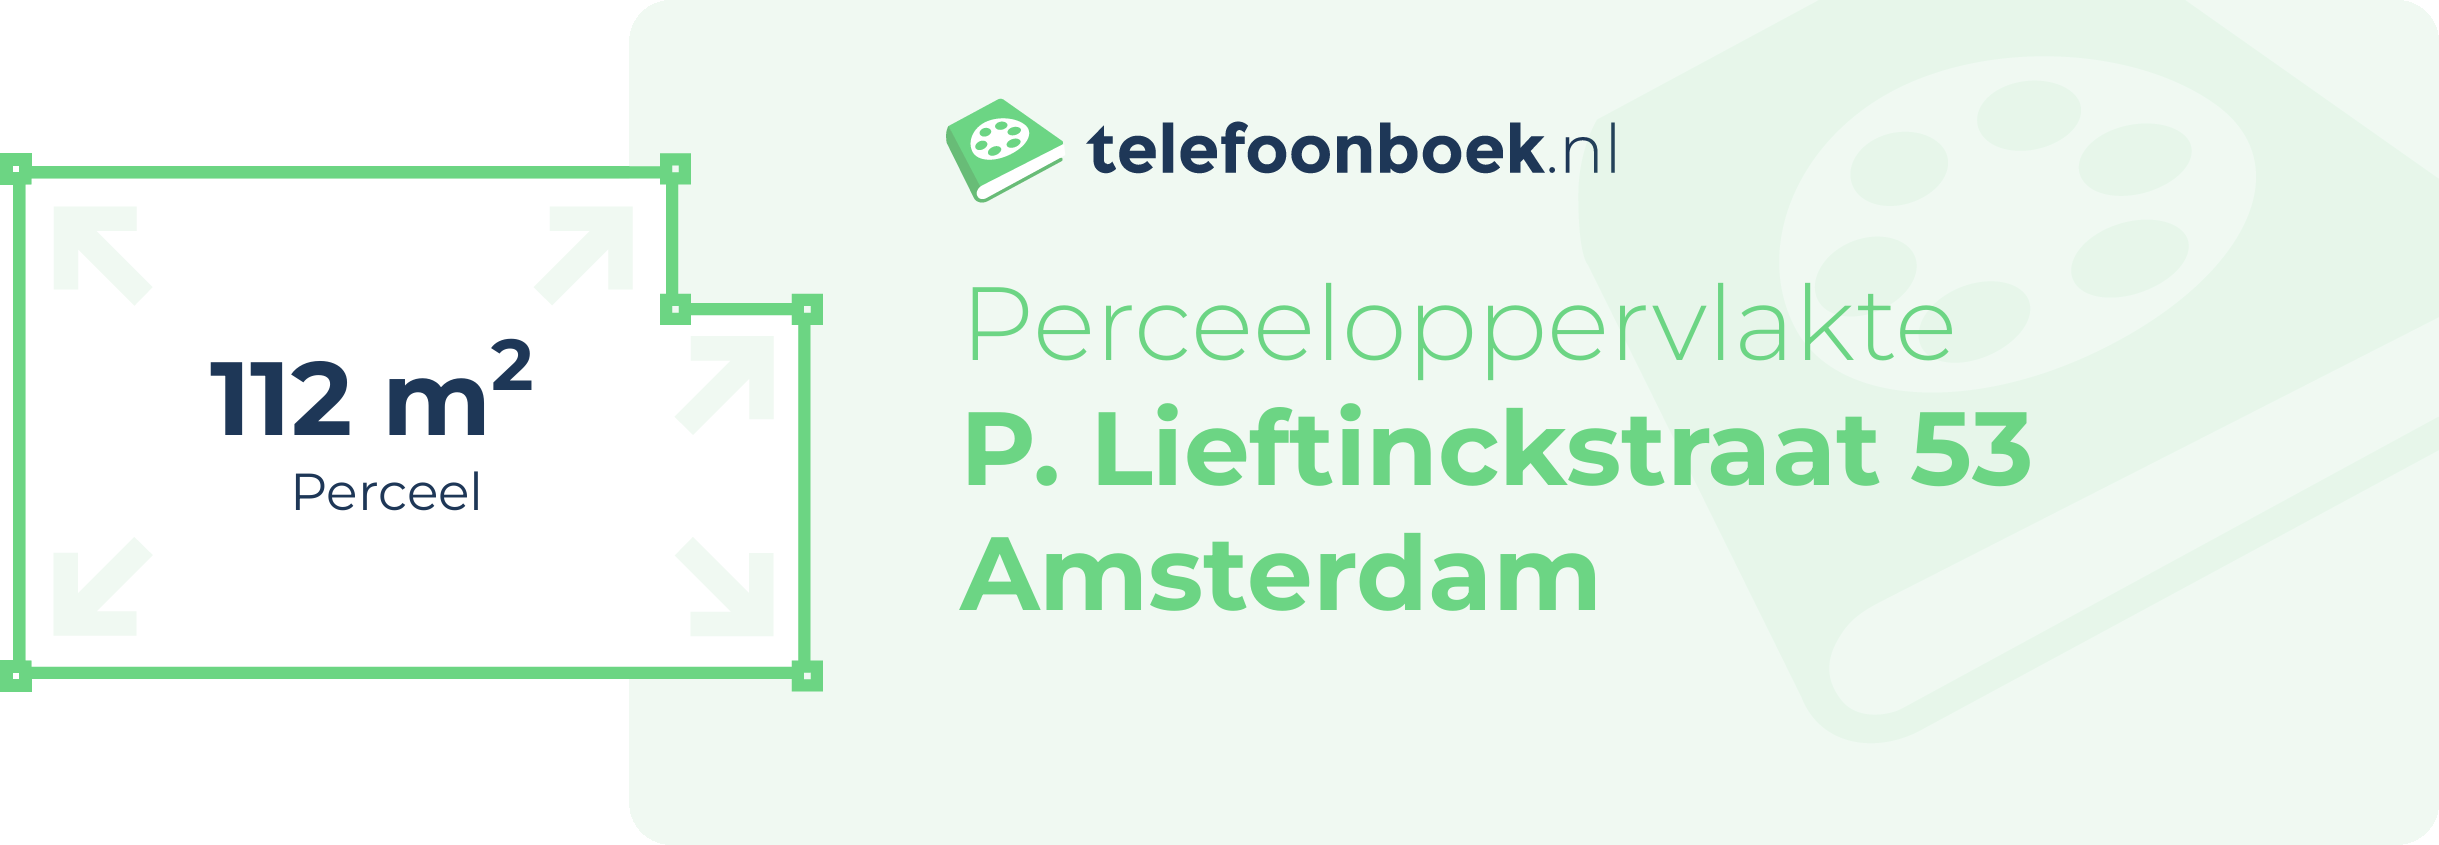 Perceeloppervlakte P. Lieftinckstraat 53 Amsterdam